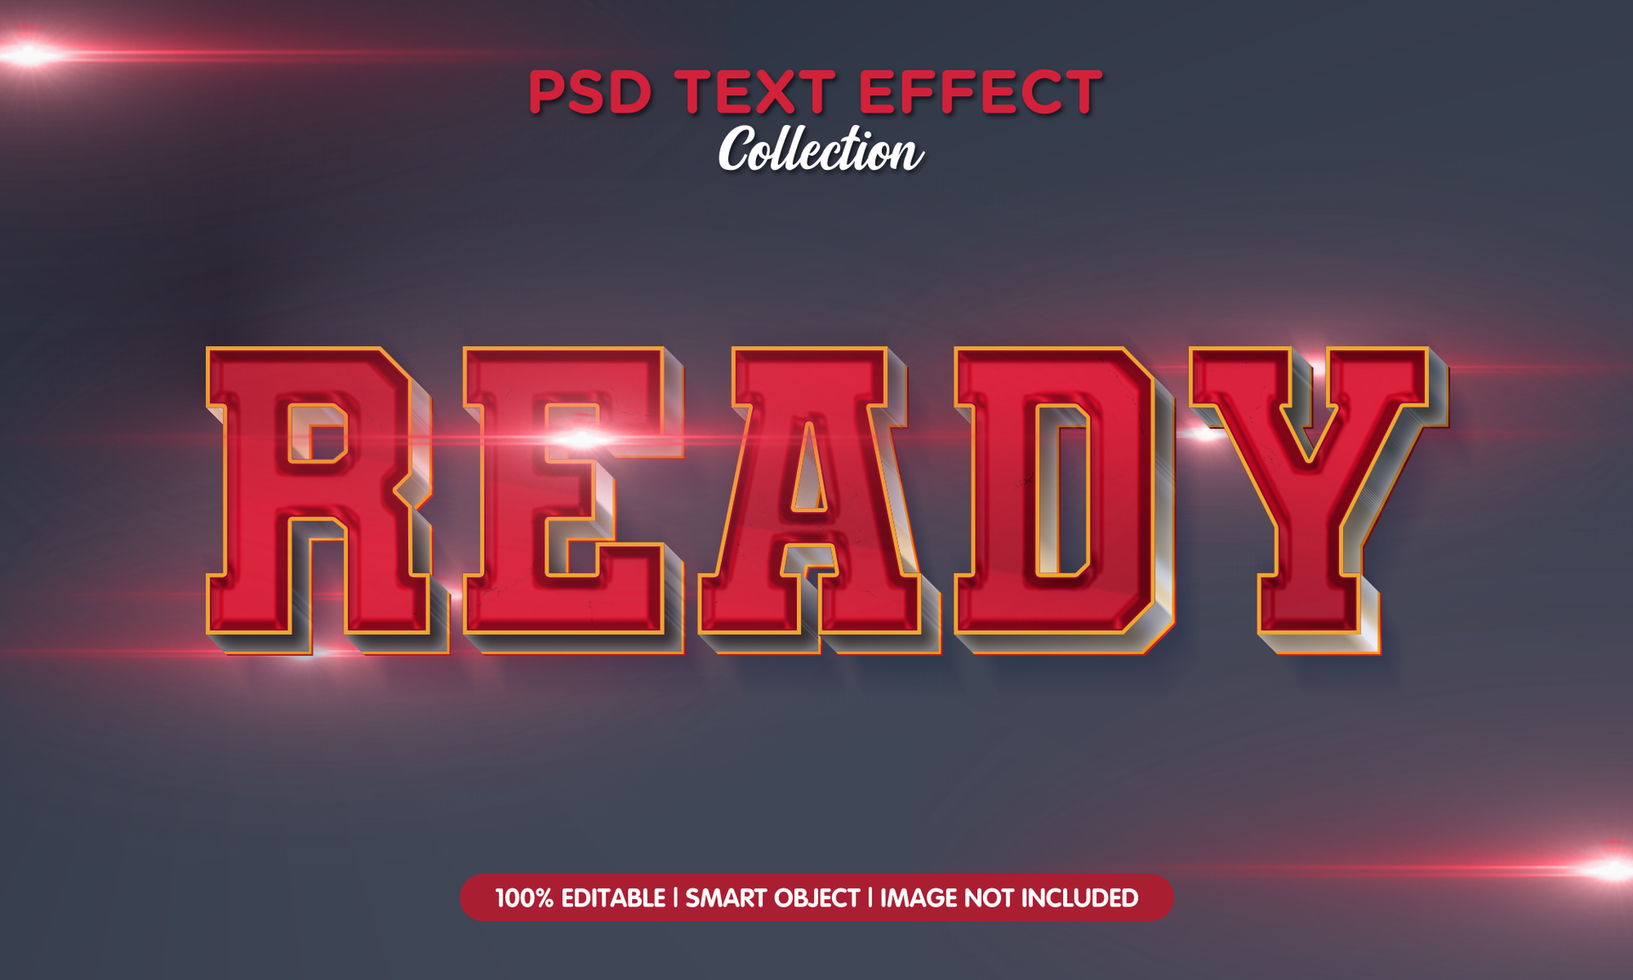 ready psd text effect template